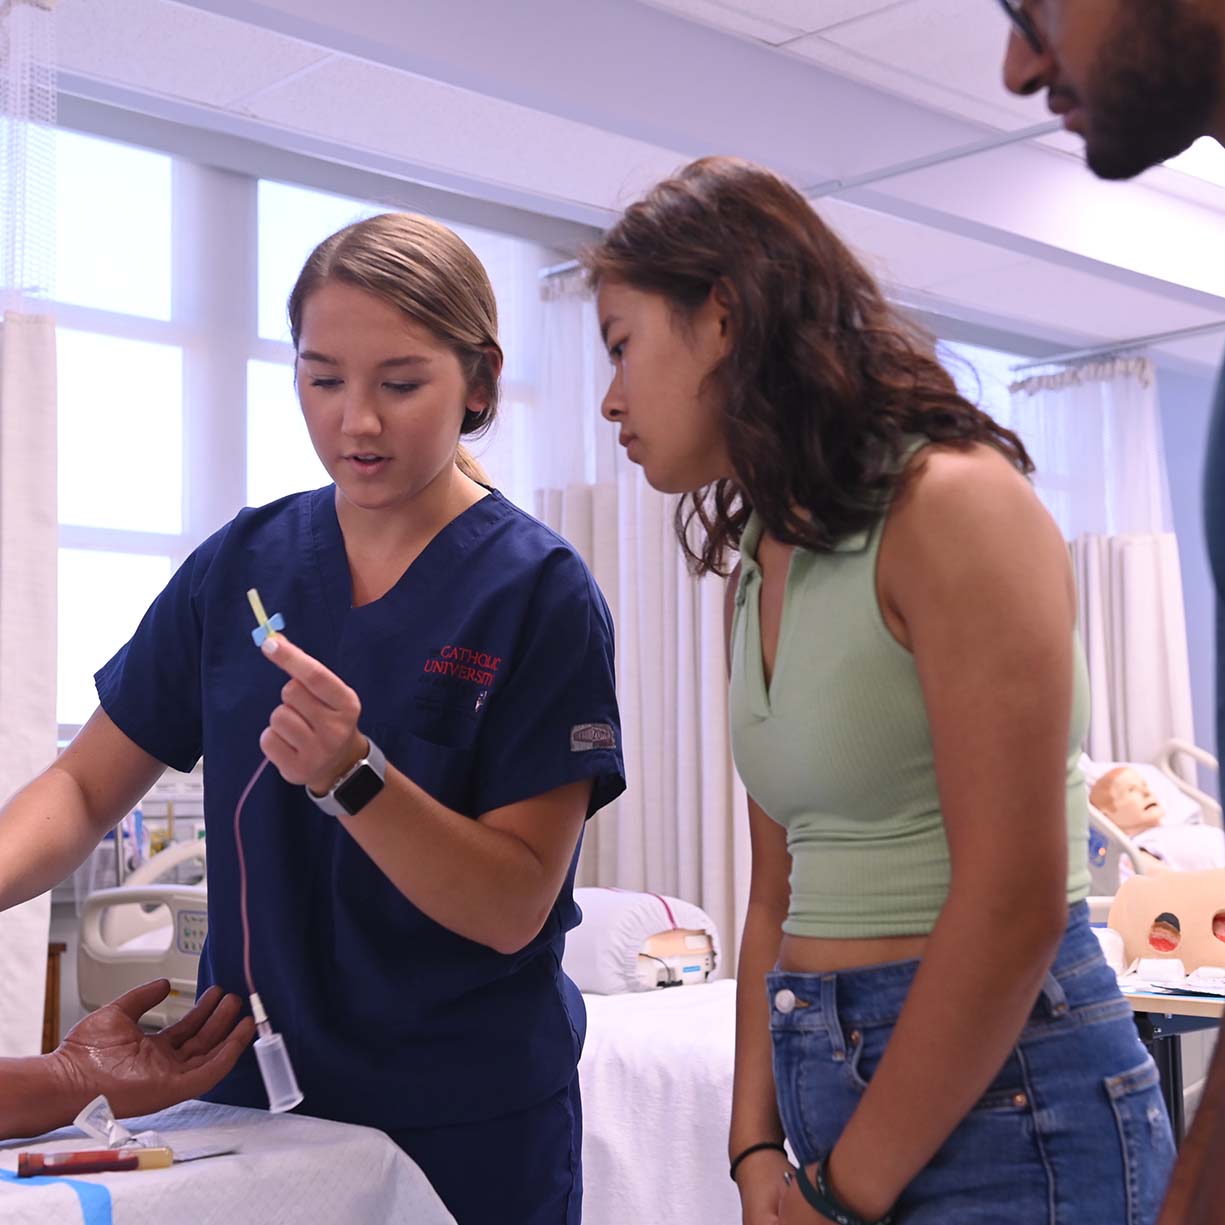 Nursing student showcasing how to insert an IV